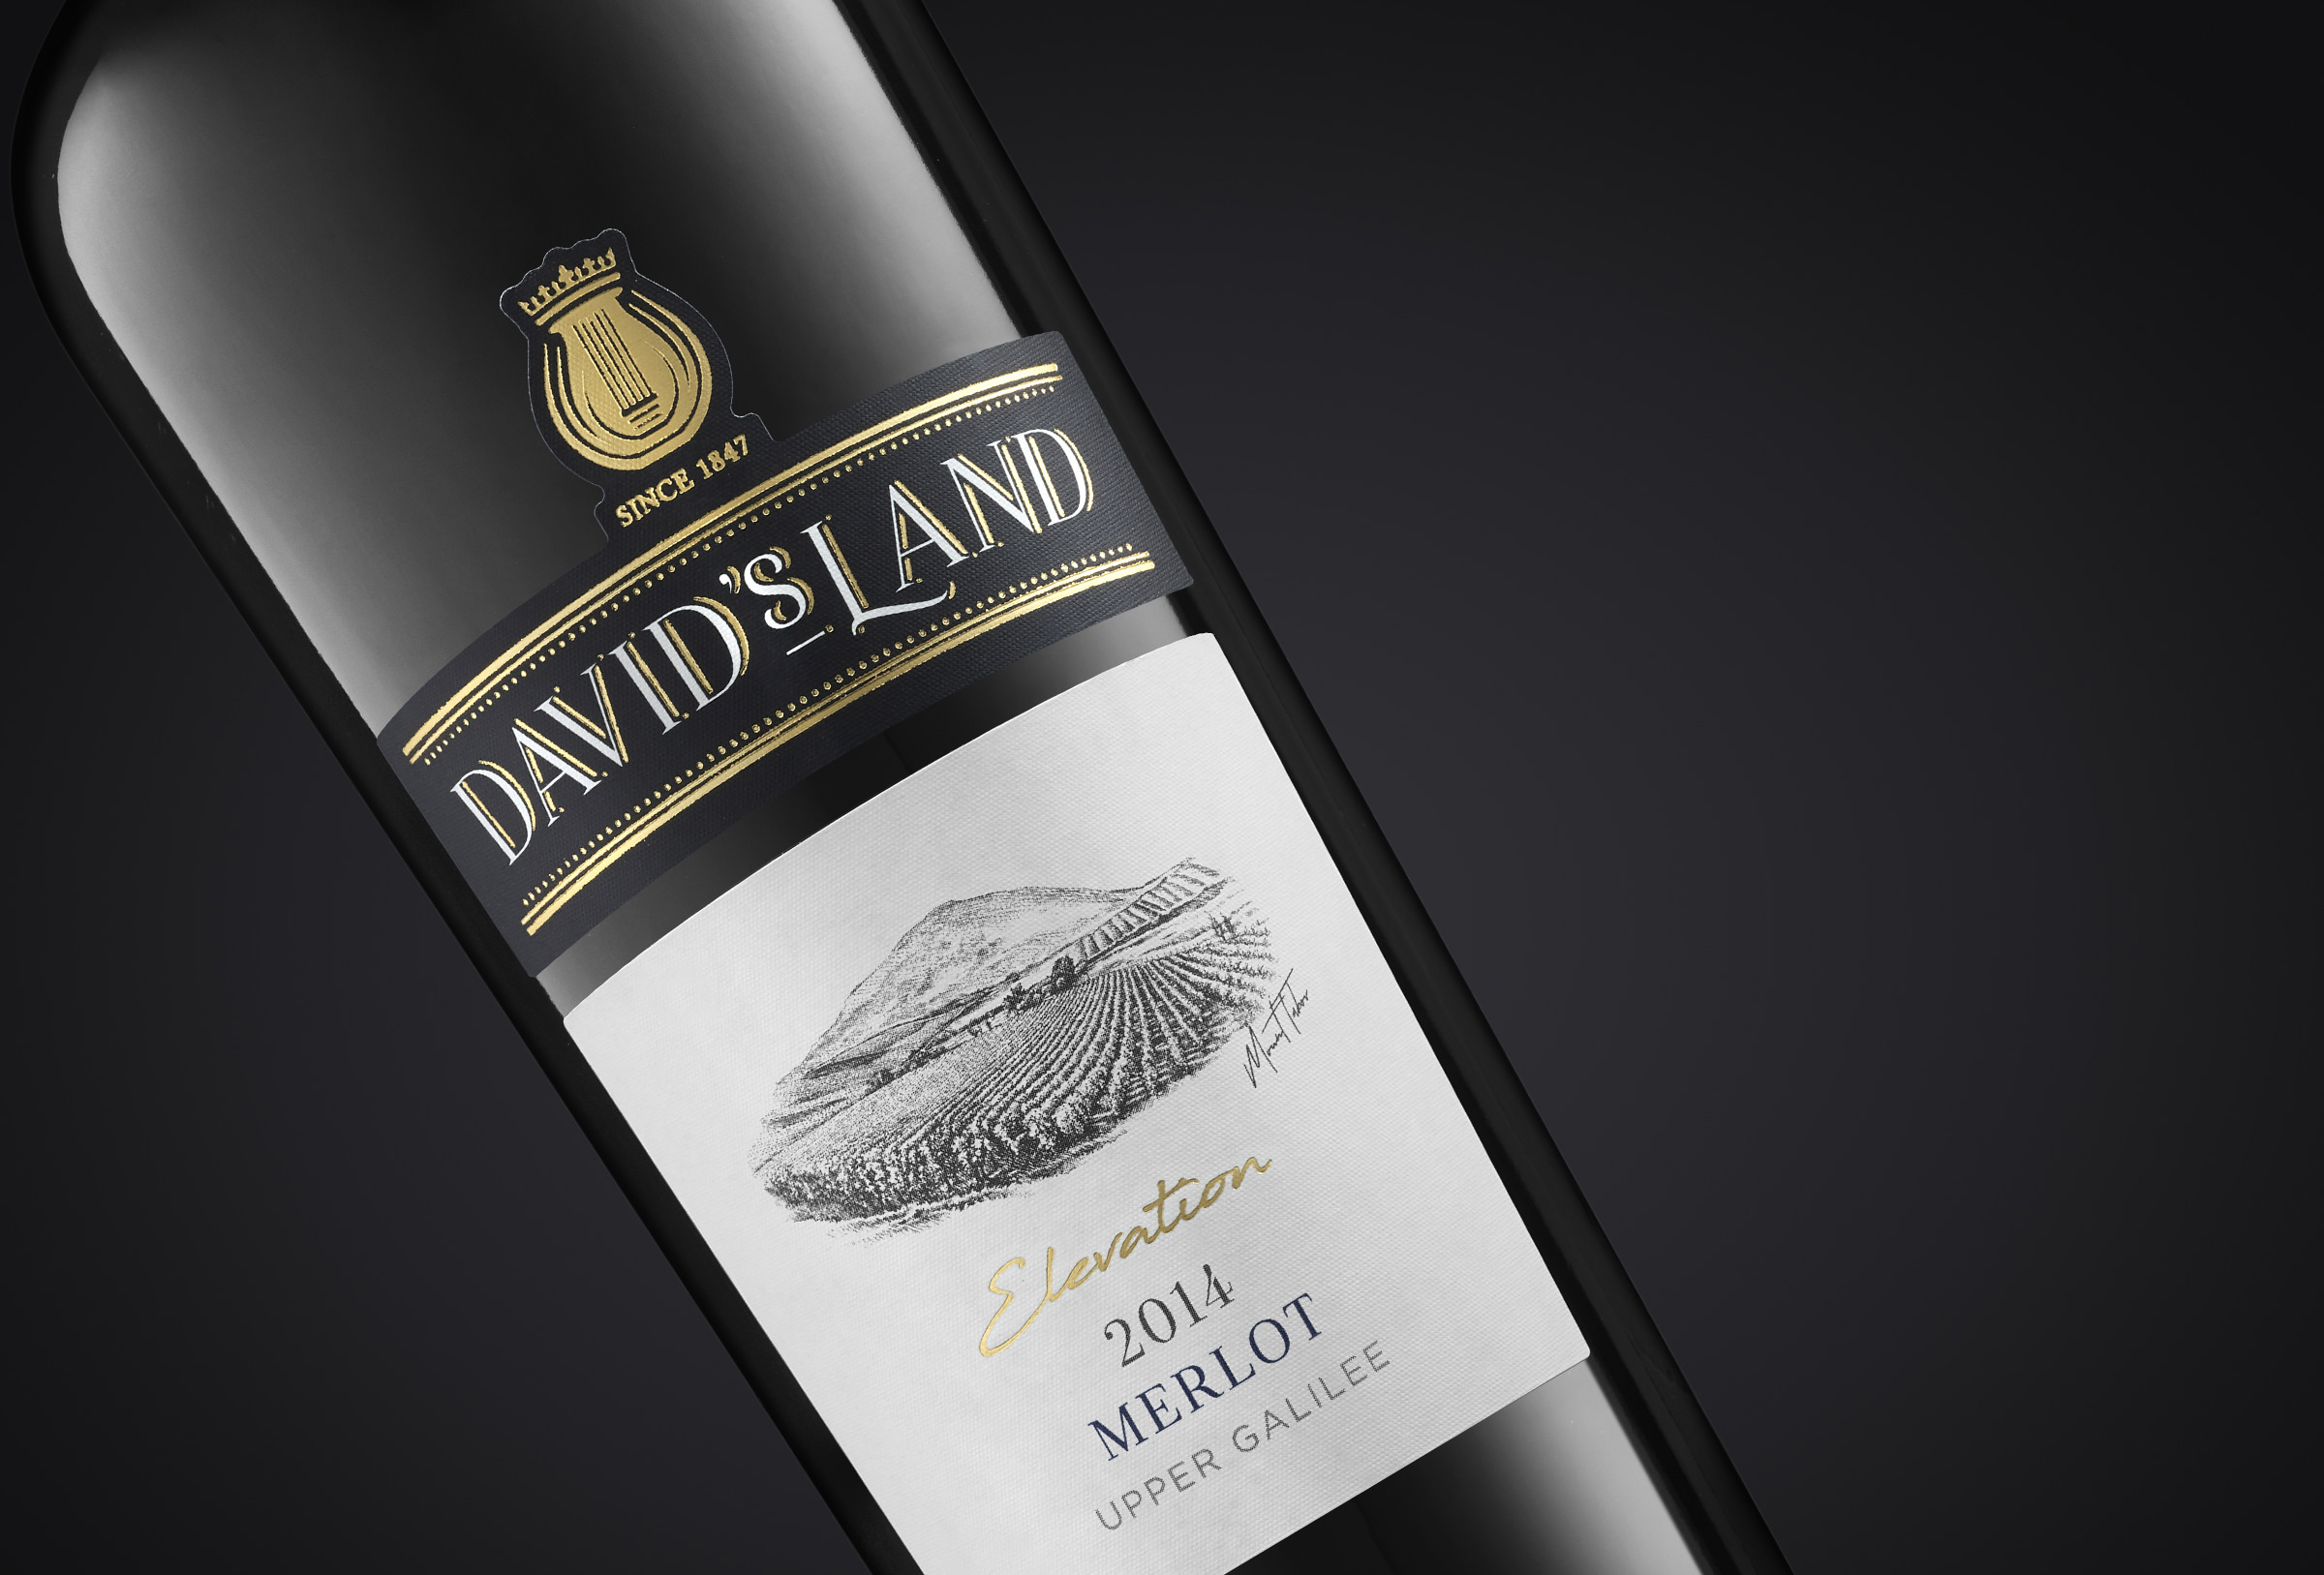 david land wine brand